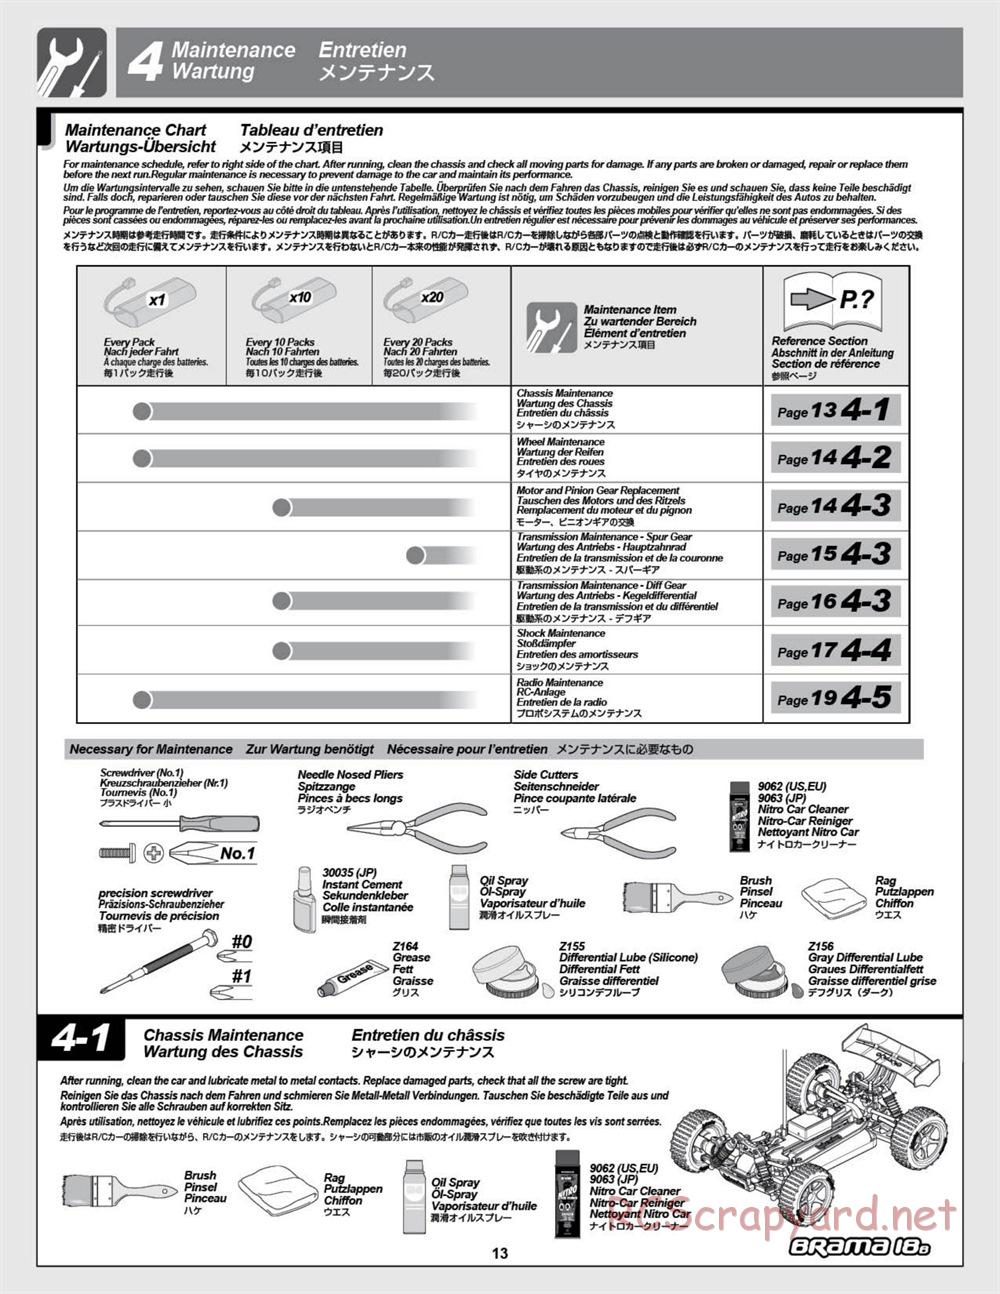 HPI - Brama 18B - Manual - Page 13